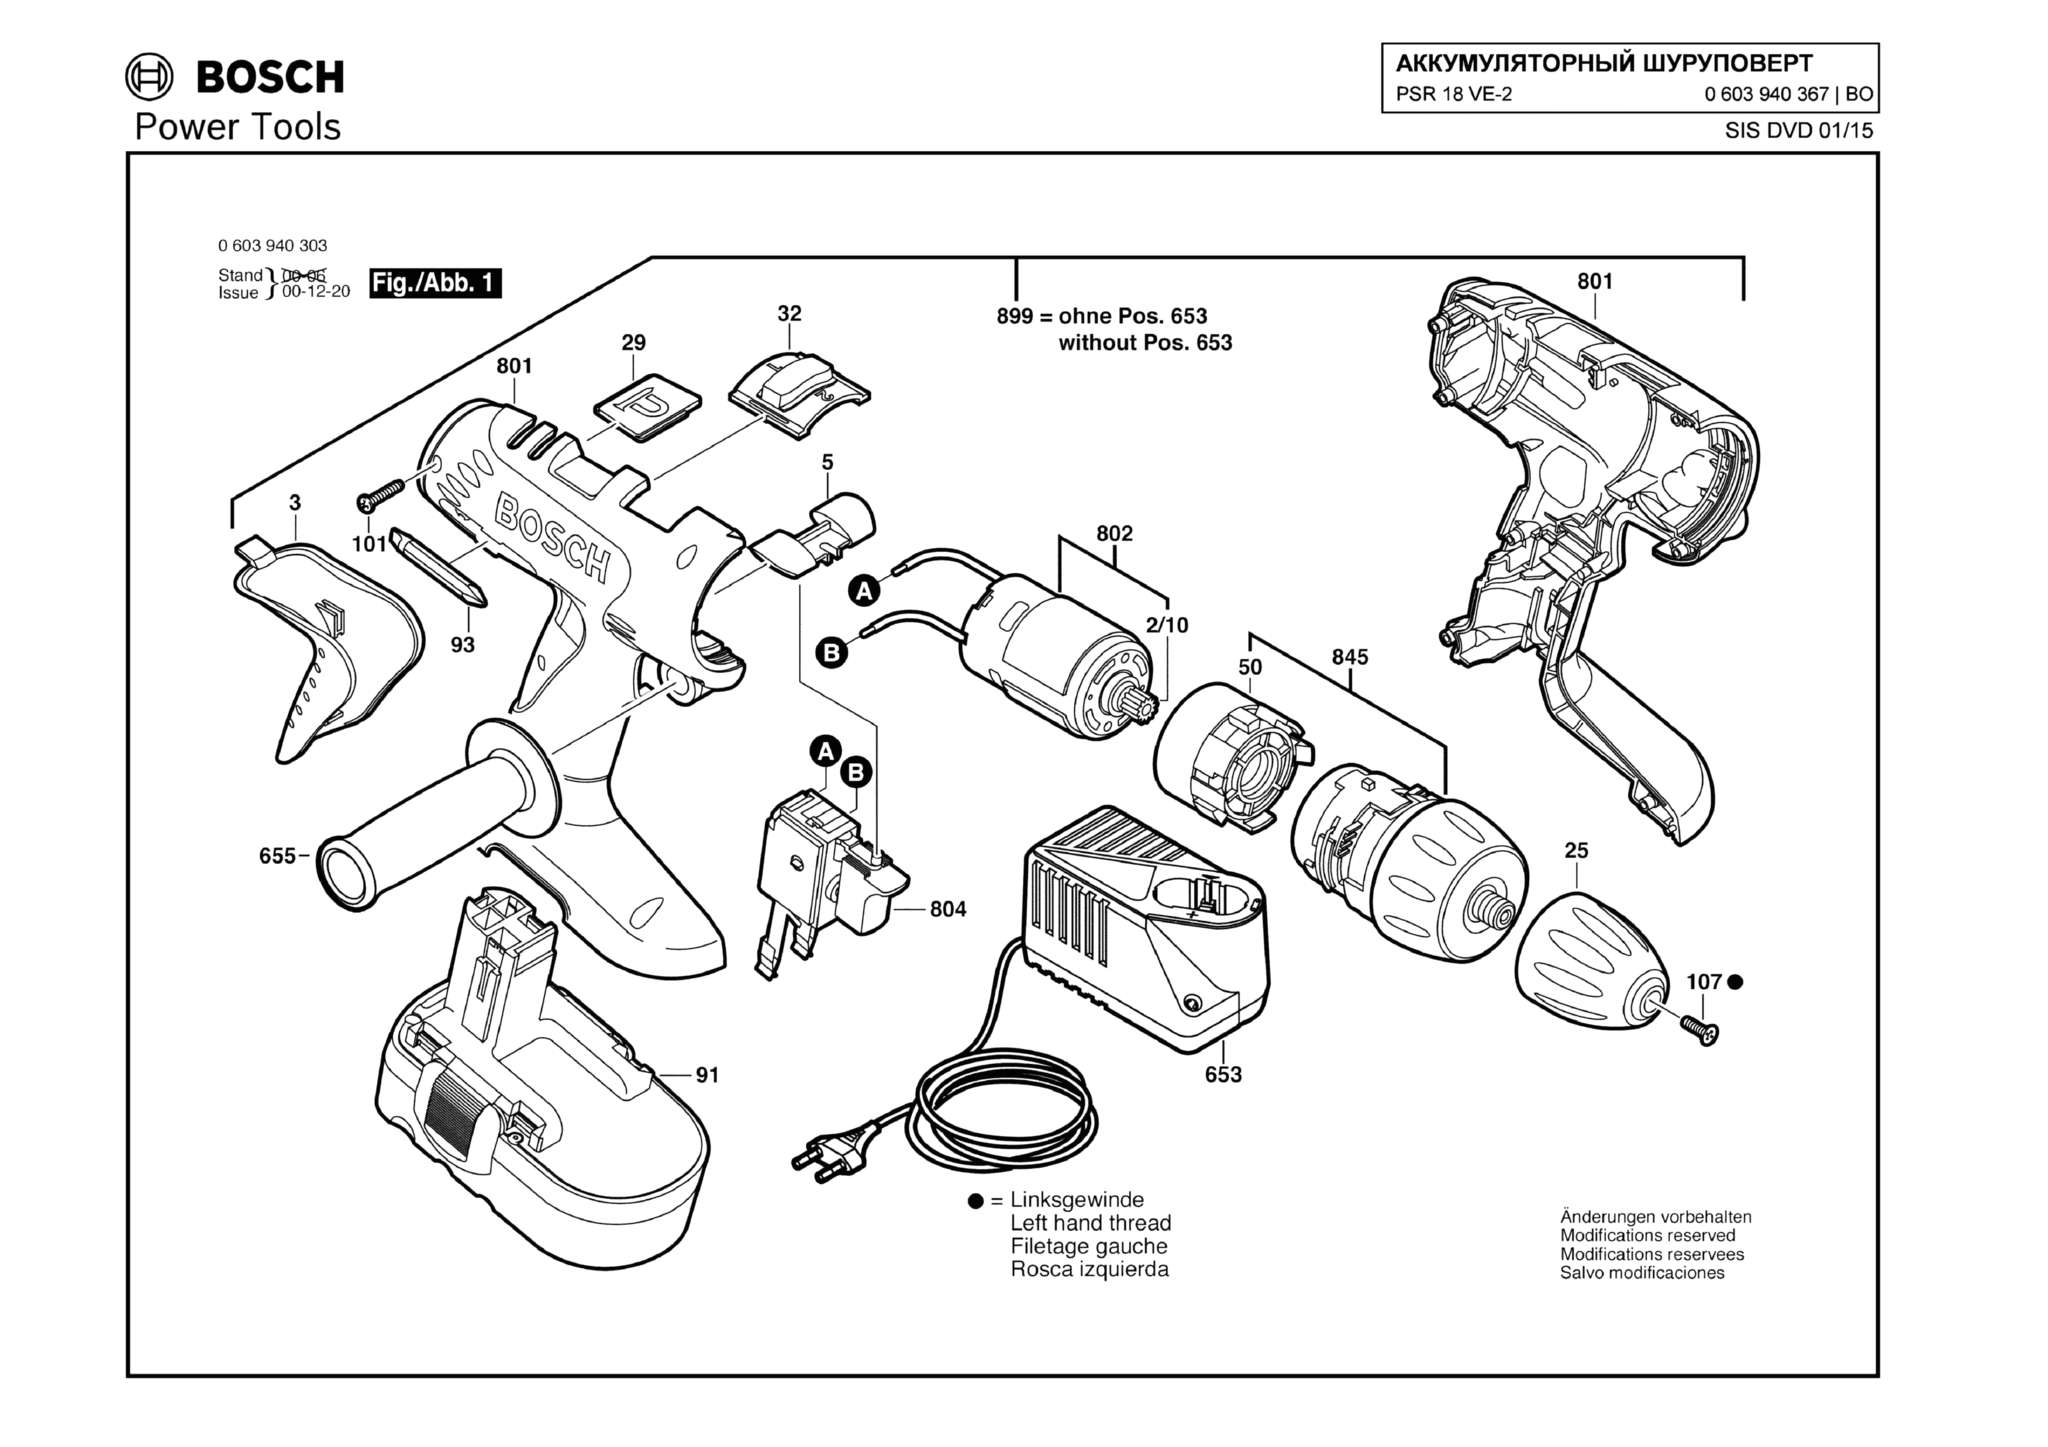 Запчасти, схема и деталировка Bosch PSR 18 VE-2 (ТИП 0603940367)